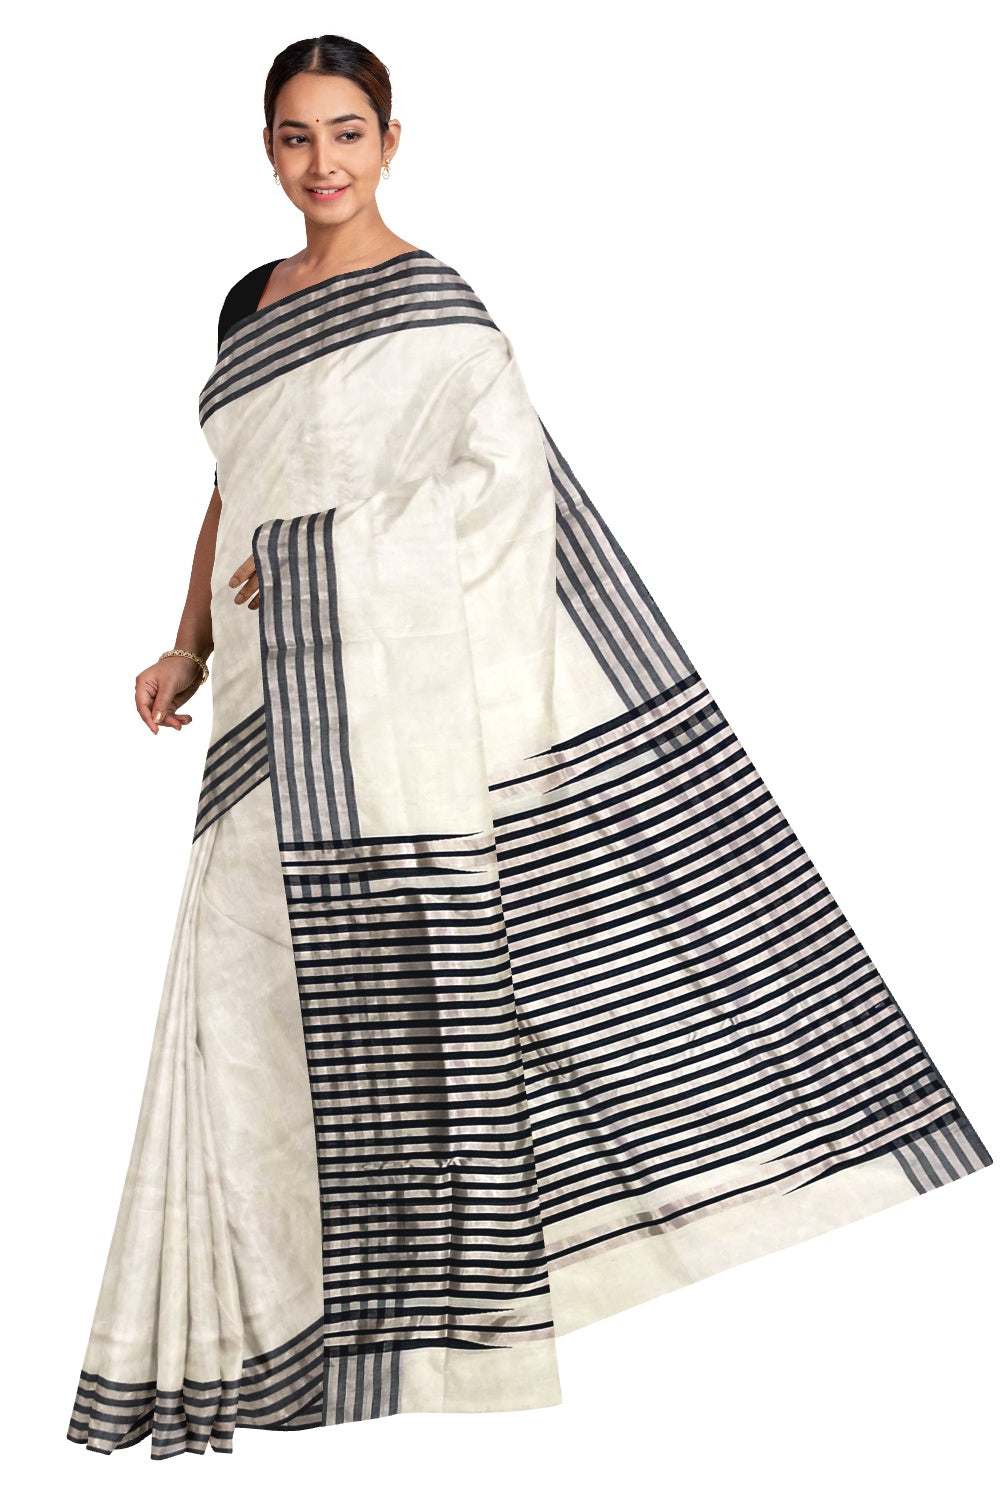 Southloom Premium Handloom Silver Kasavu and Black Katti Kara Saree with Lines Design 20 Inch Pallu